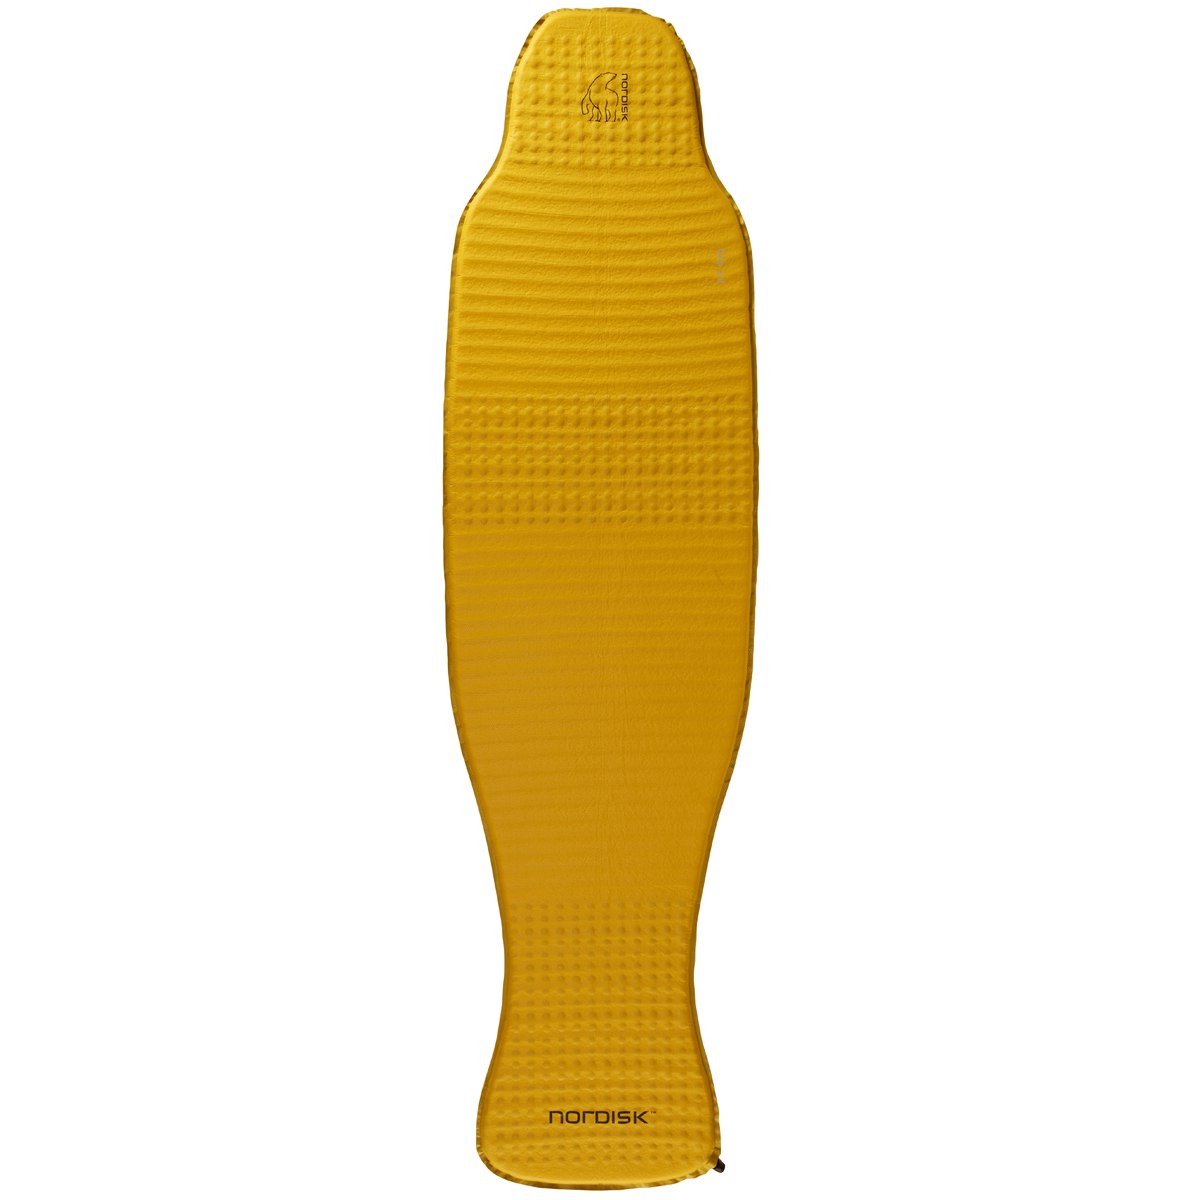 Picture of Nordisk Grip 3.8 Large Sleeping Pad - Mustard Yellow/Black